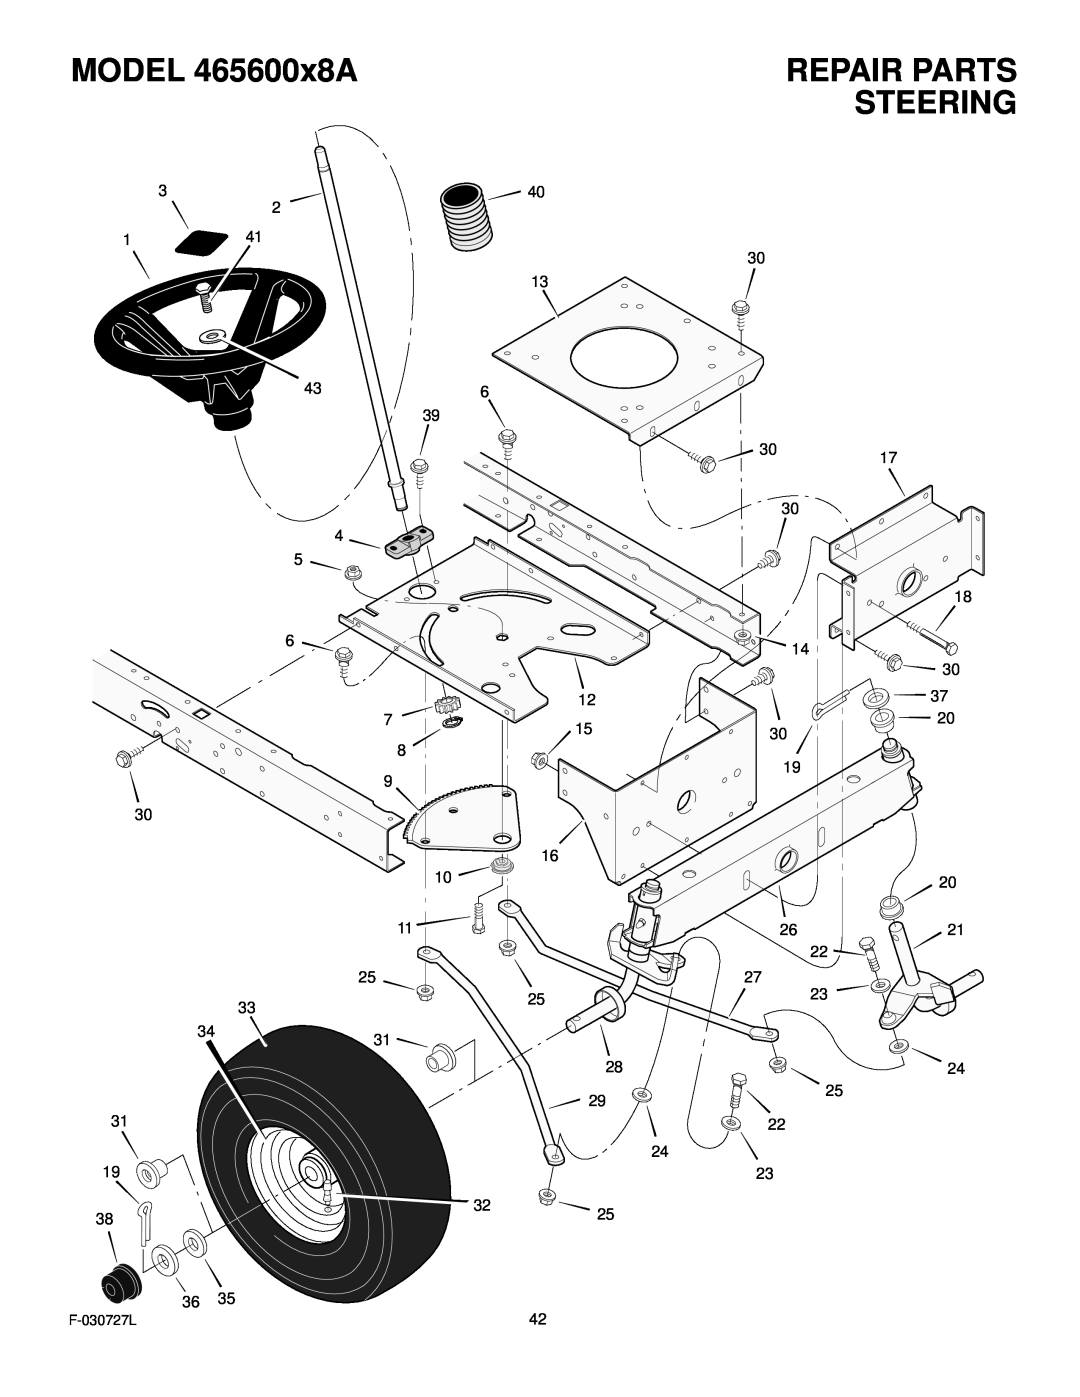 Murray manual Steering, MODEL 465600x8A, Repair Parts, F-030727L 